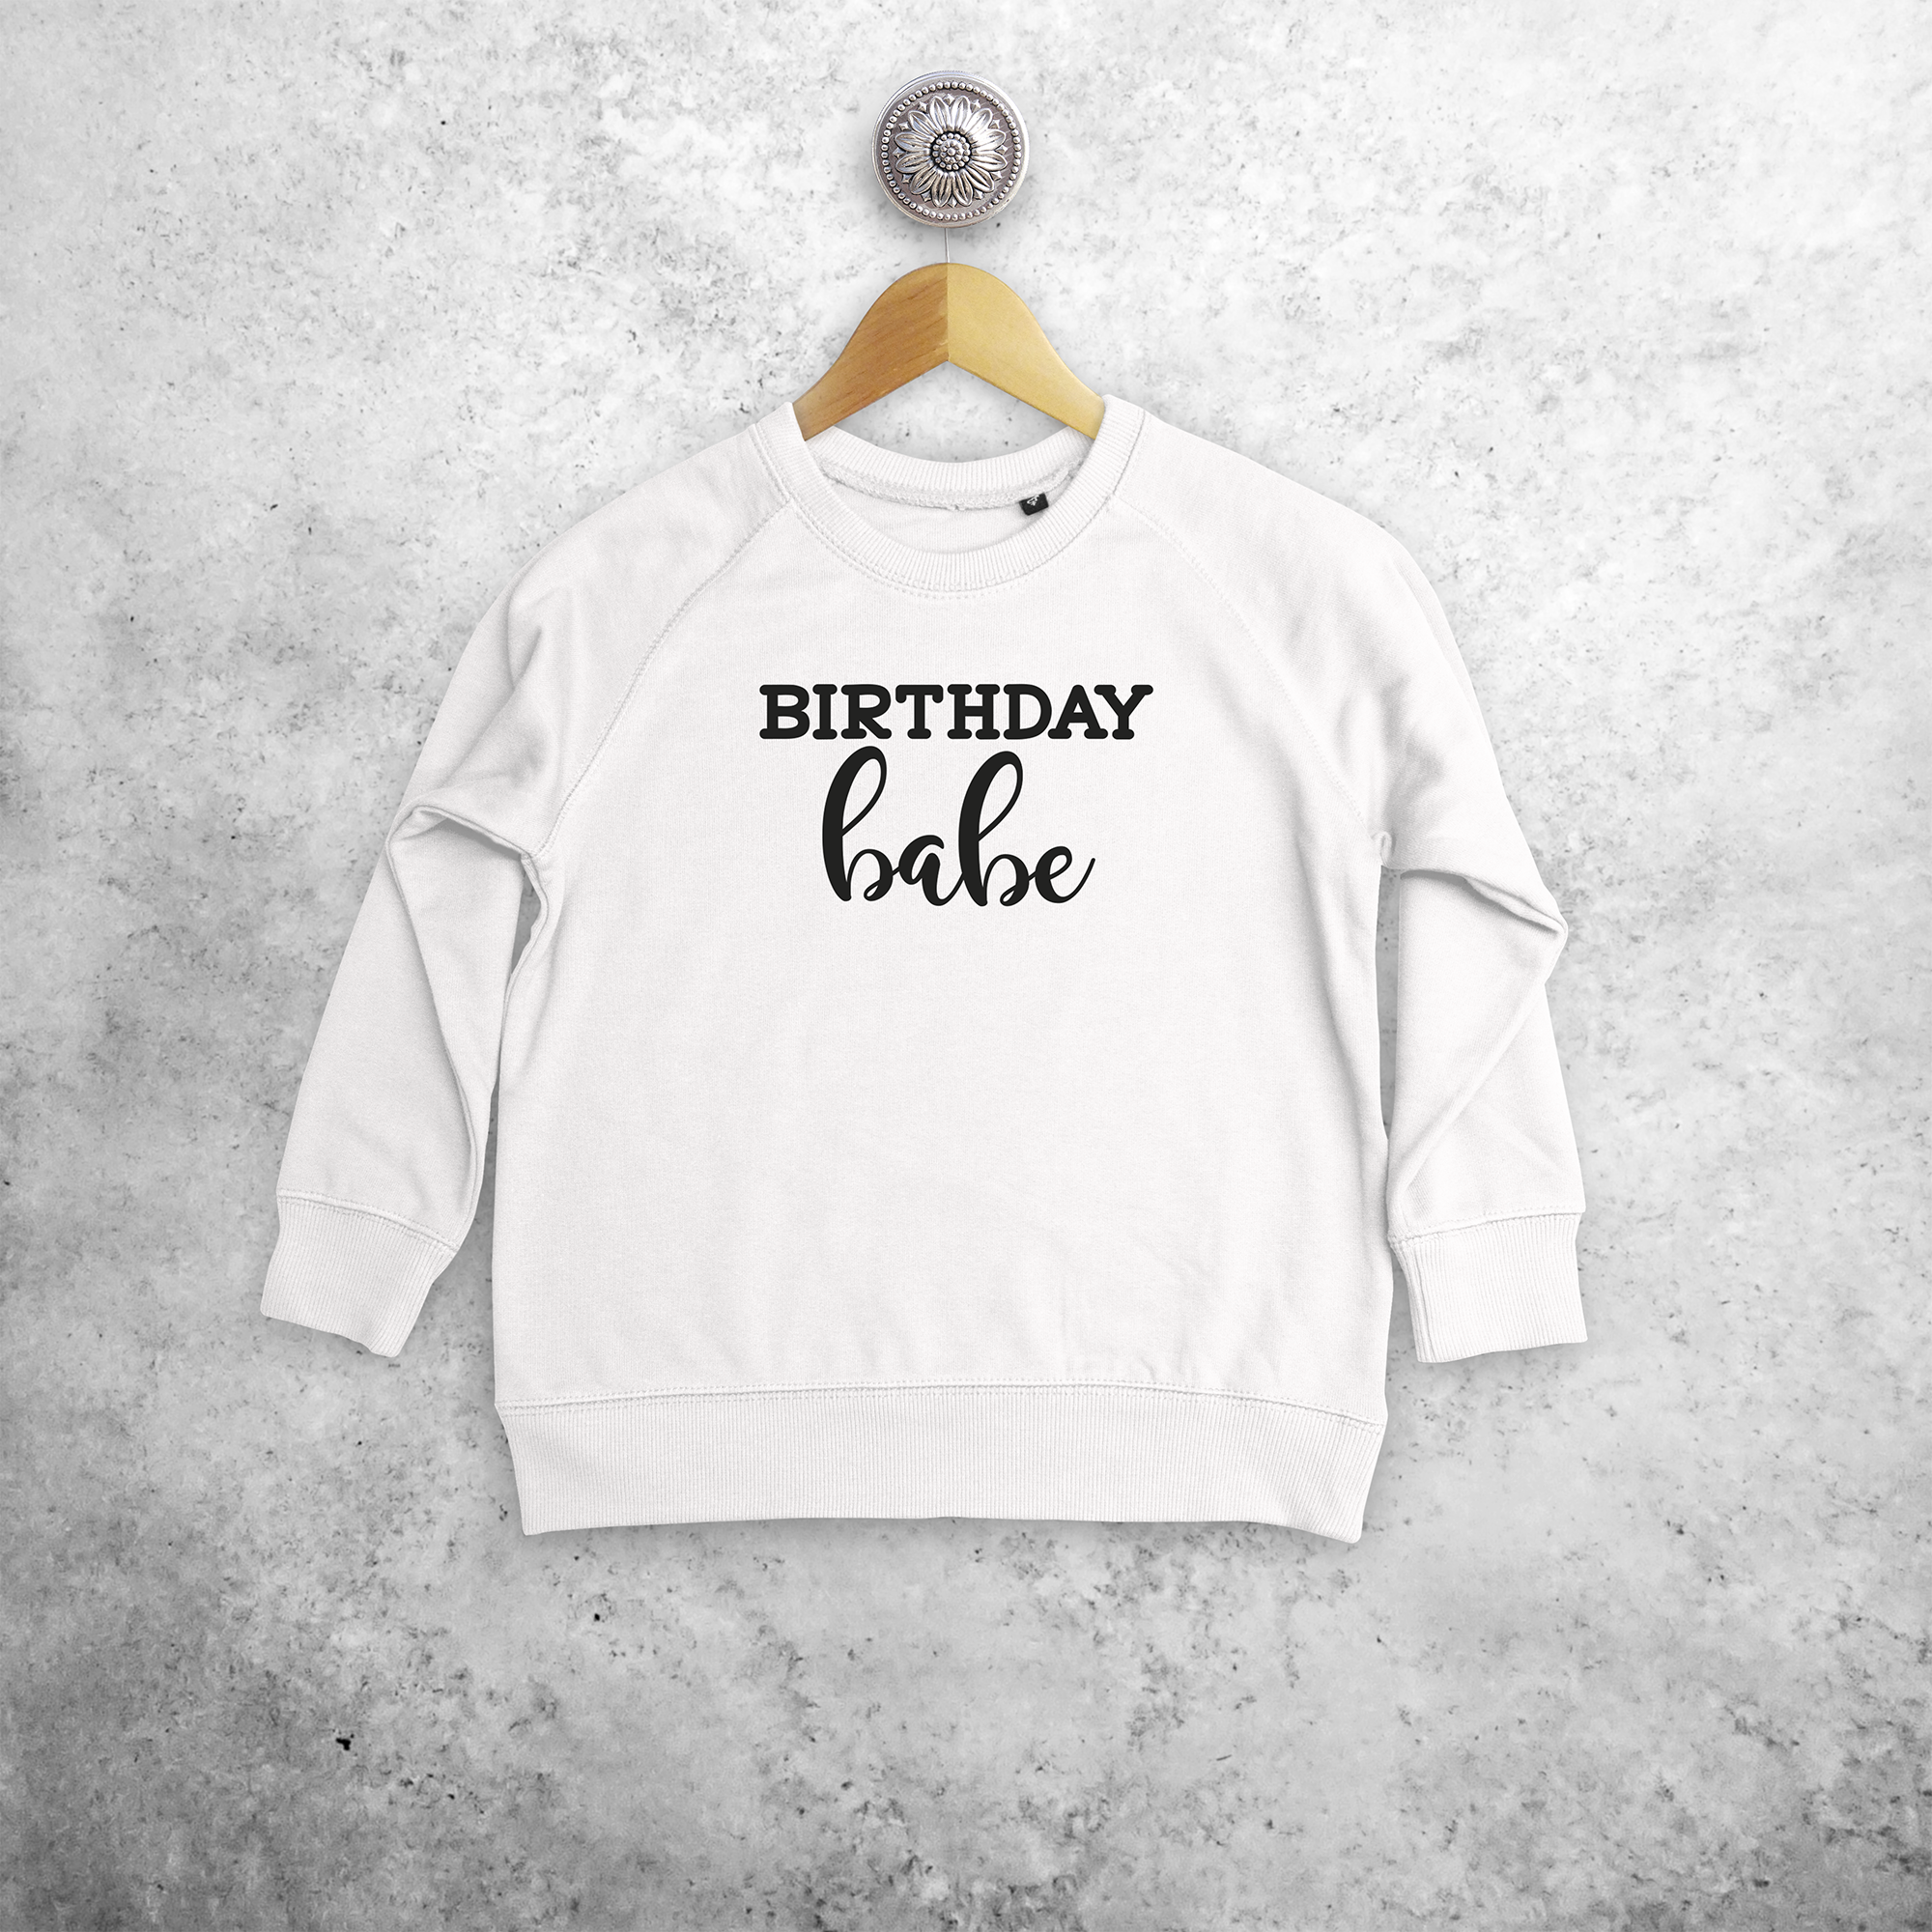 'Birthday babe' kids sweater